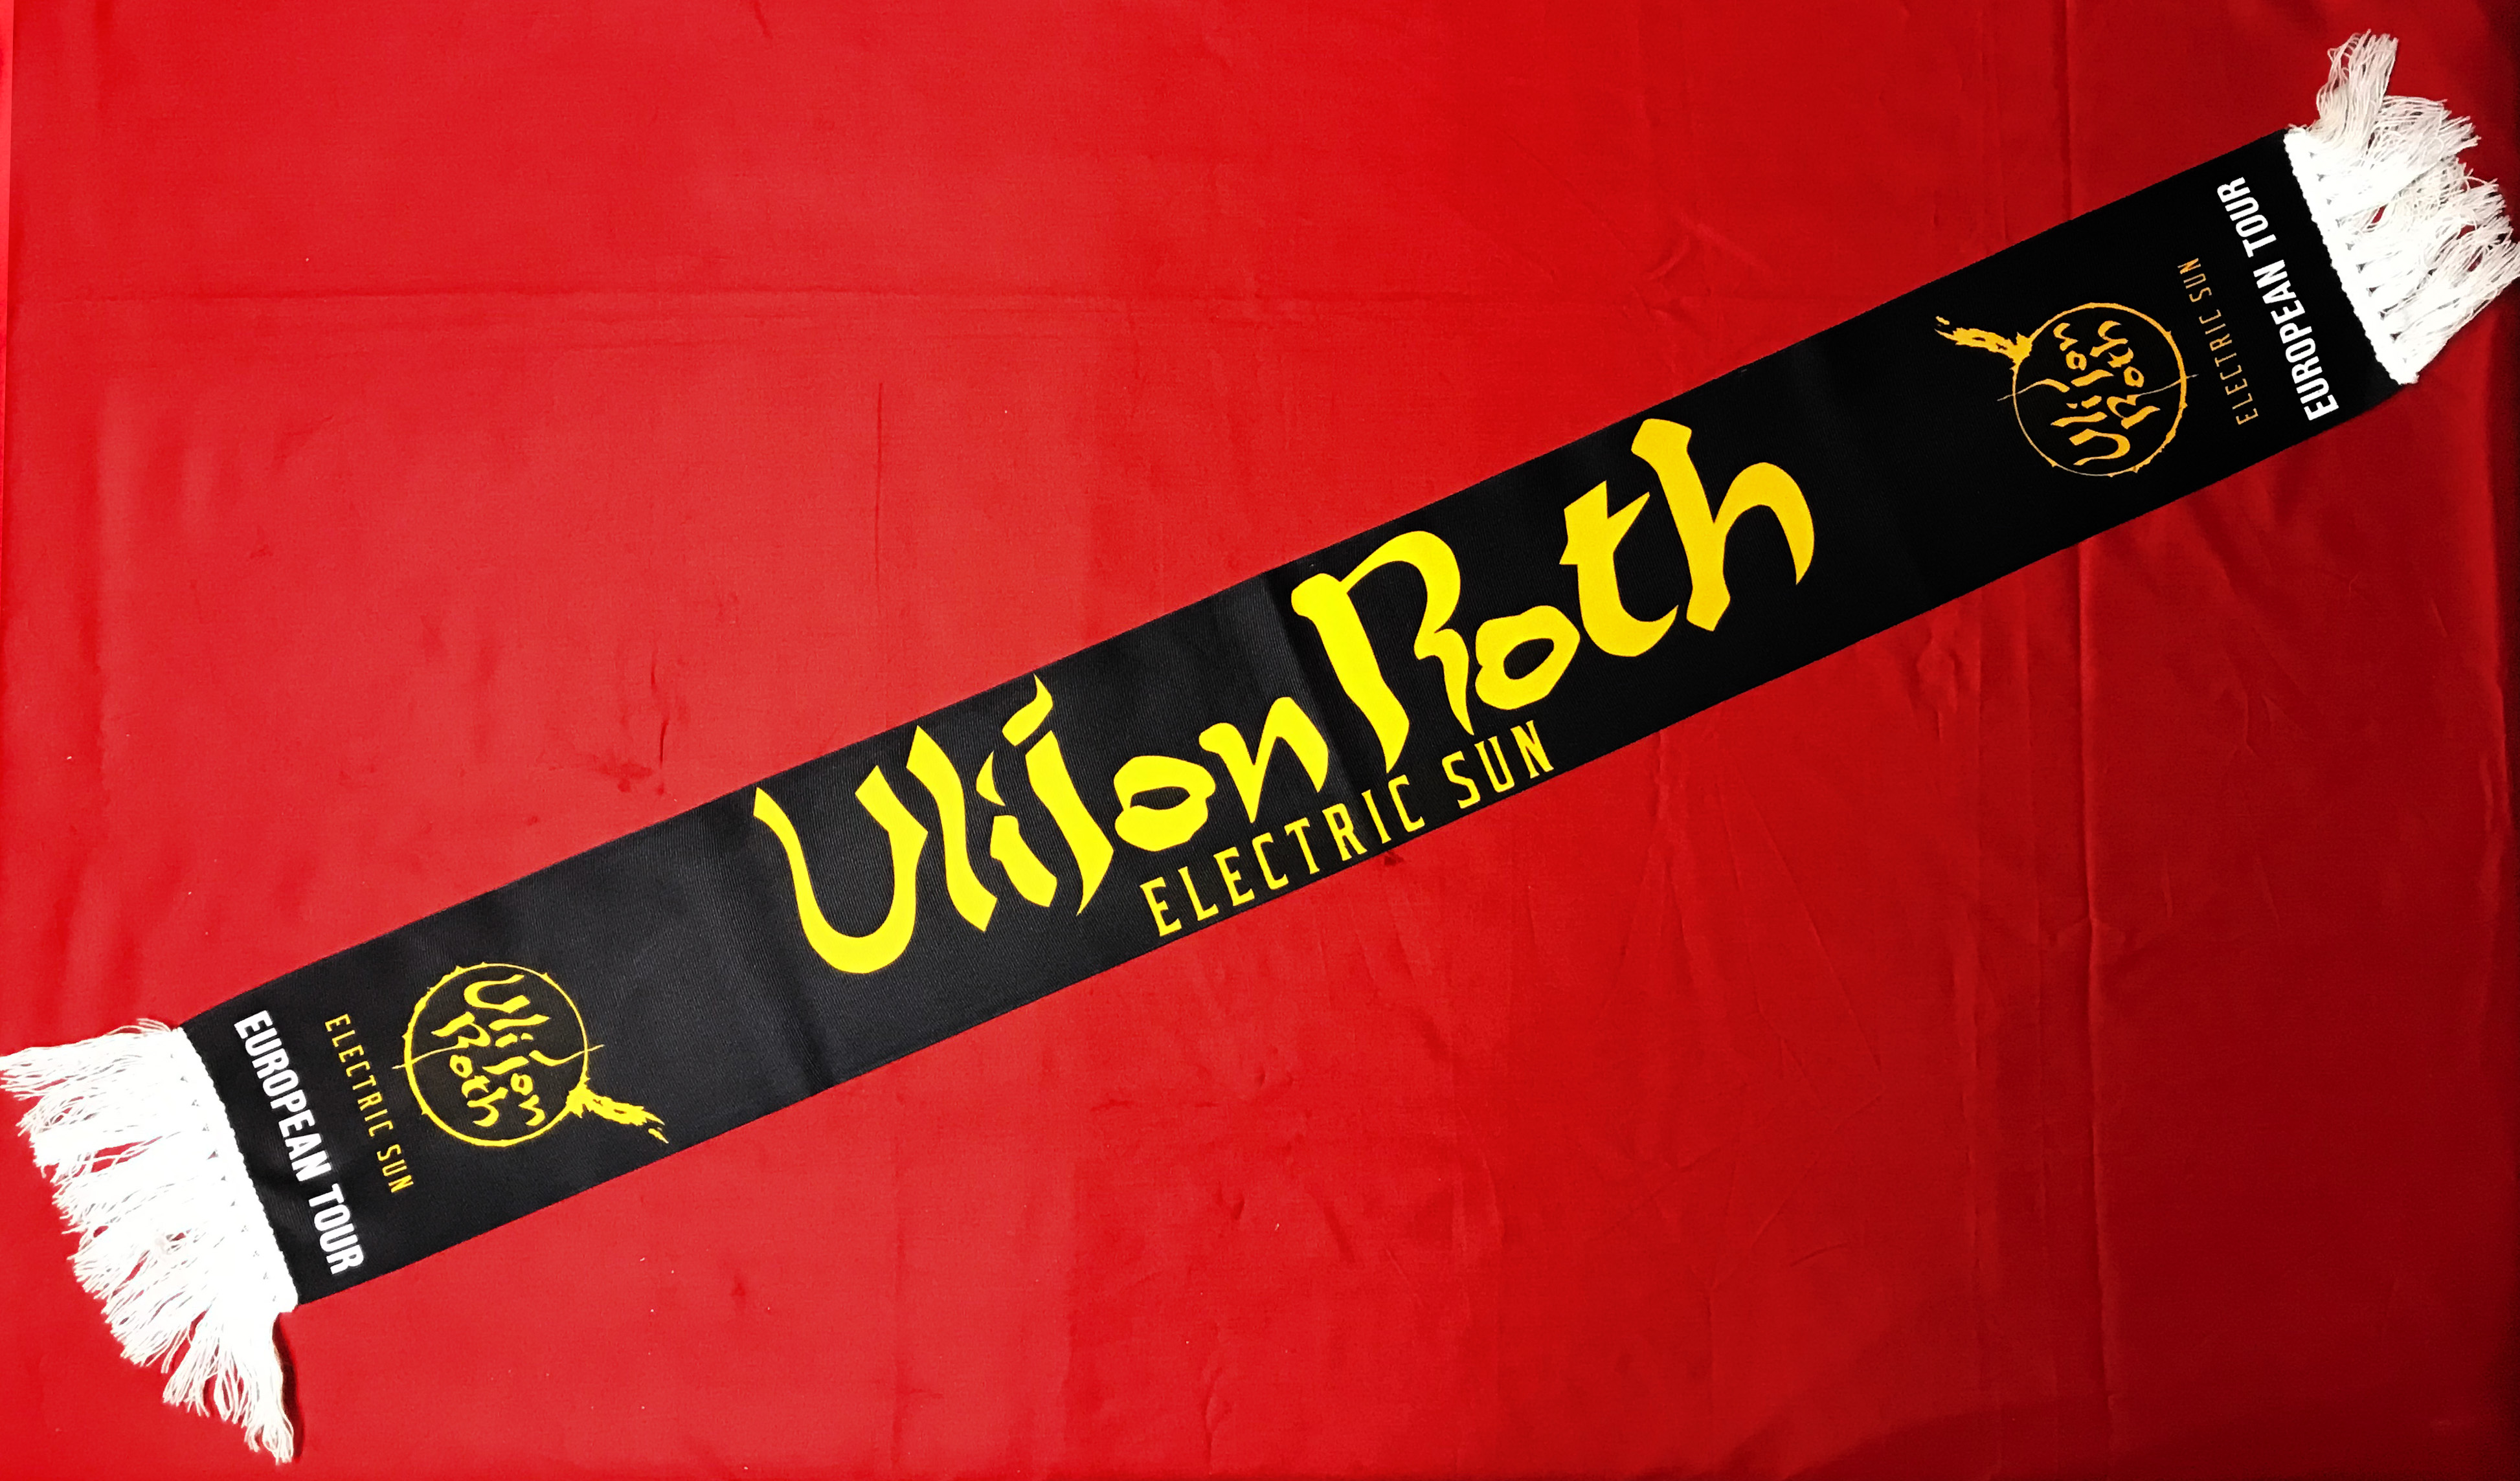 Nostalgipalatset ULI JON ROTH Tour scarf 1984